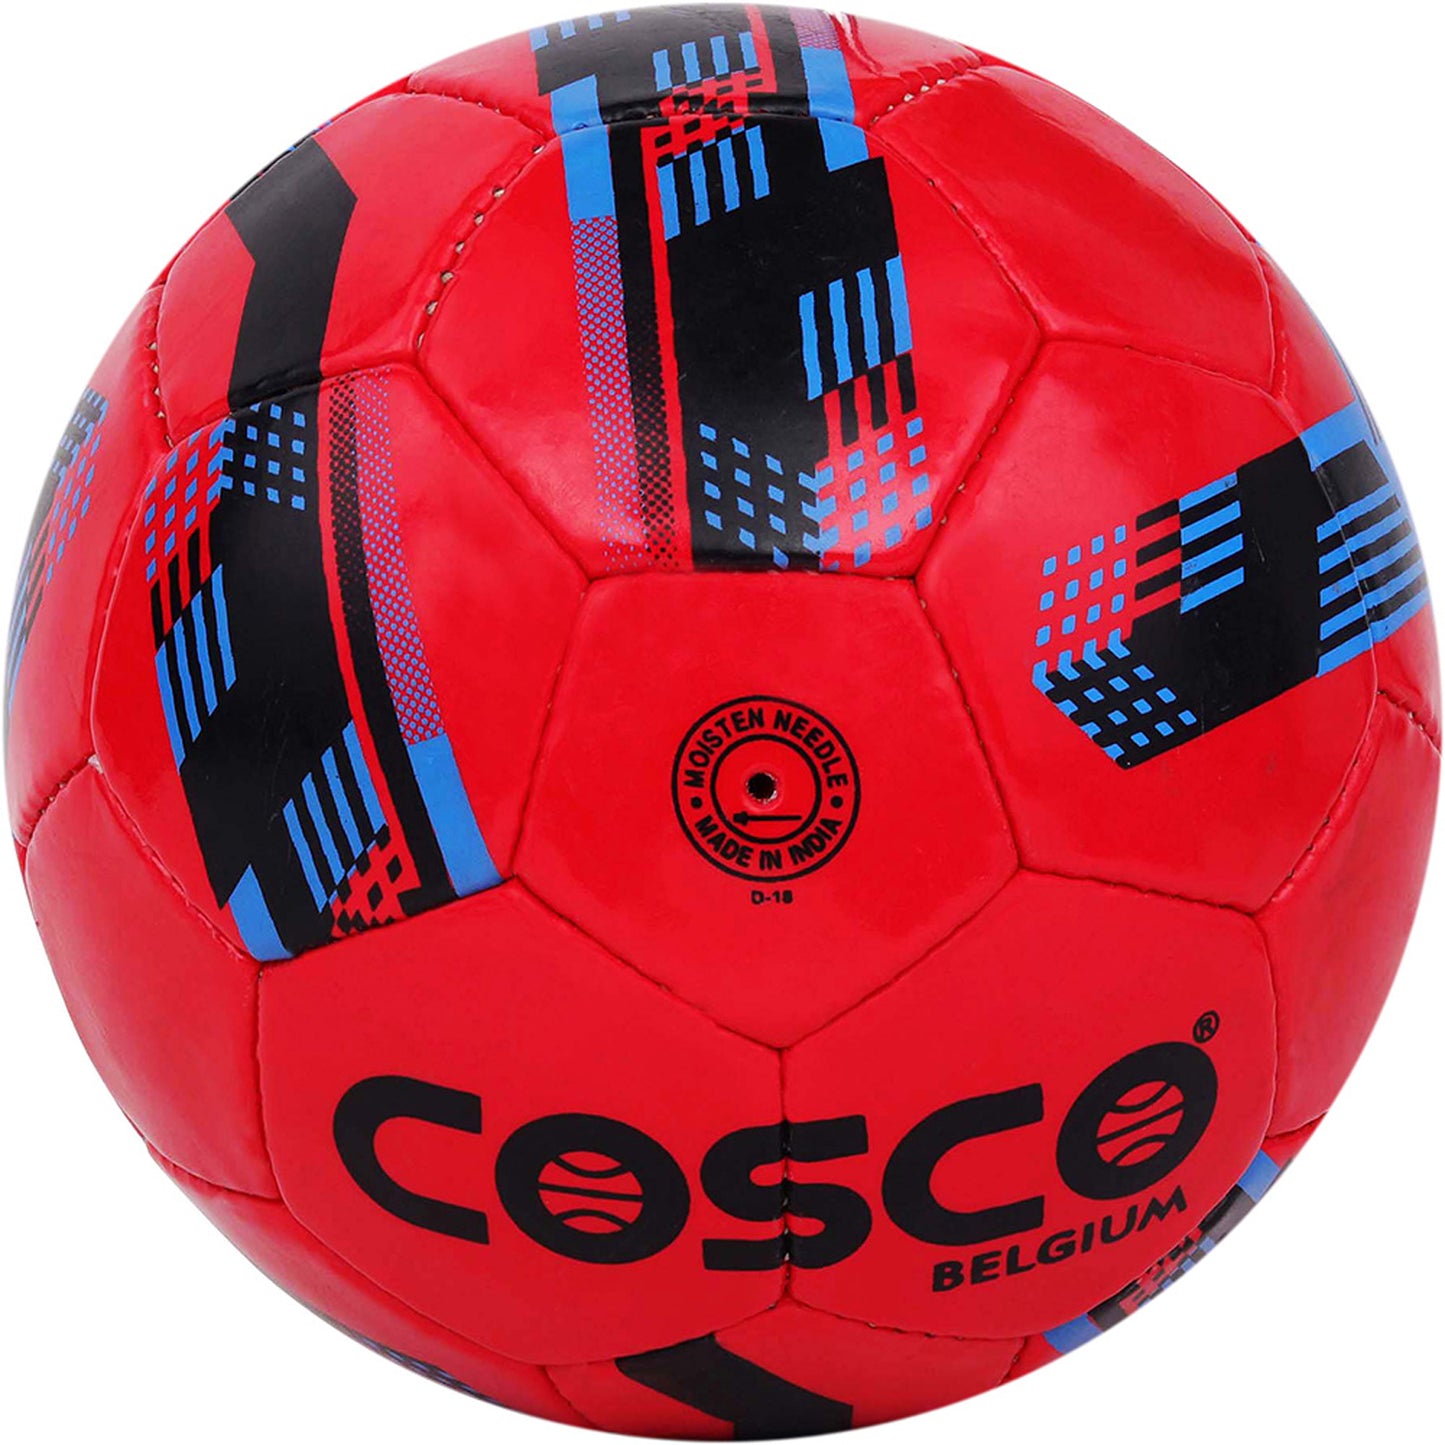 Cosco Belgium Football, Size 3 (Assorted Color) - Best Price online Prokicksports.com